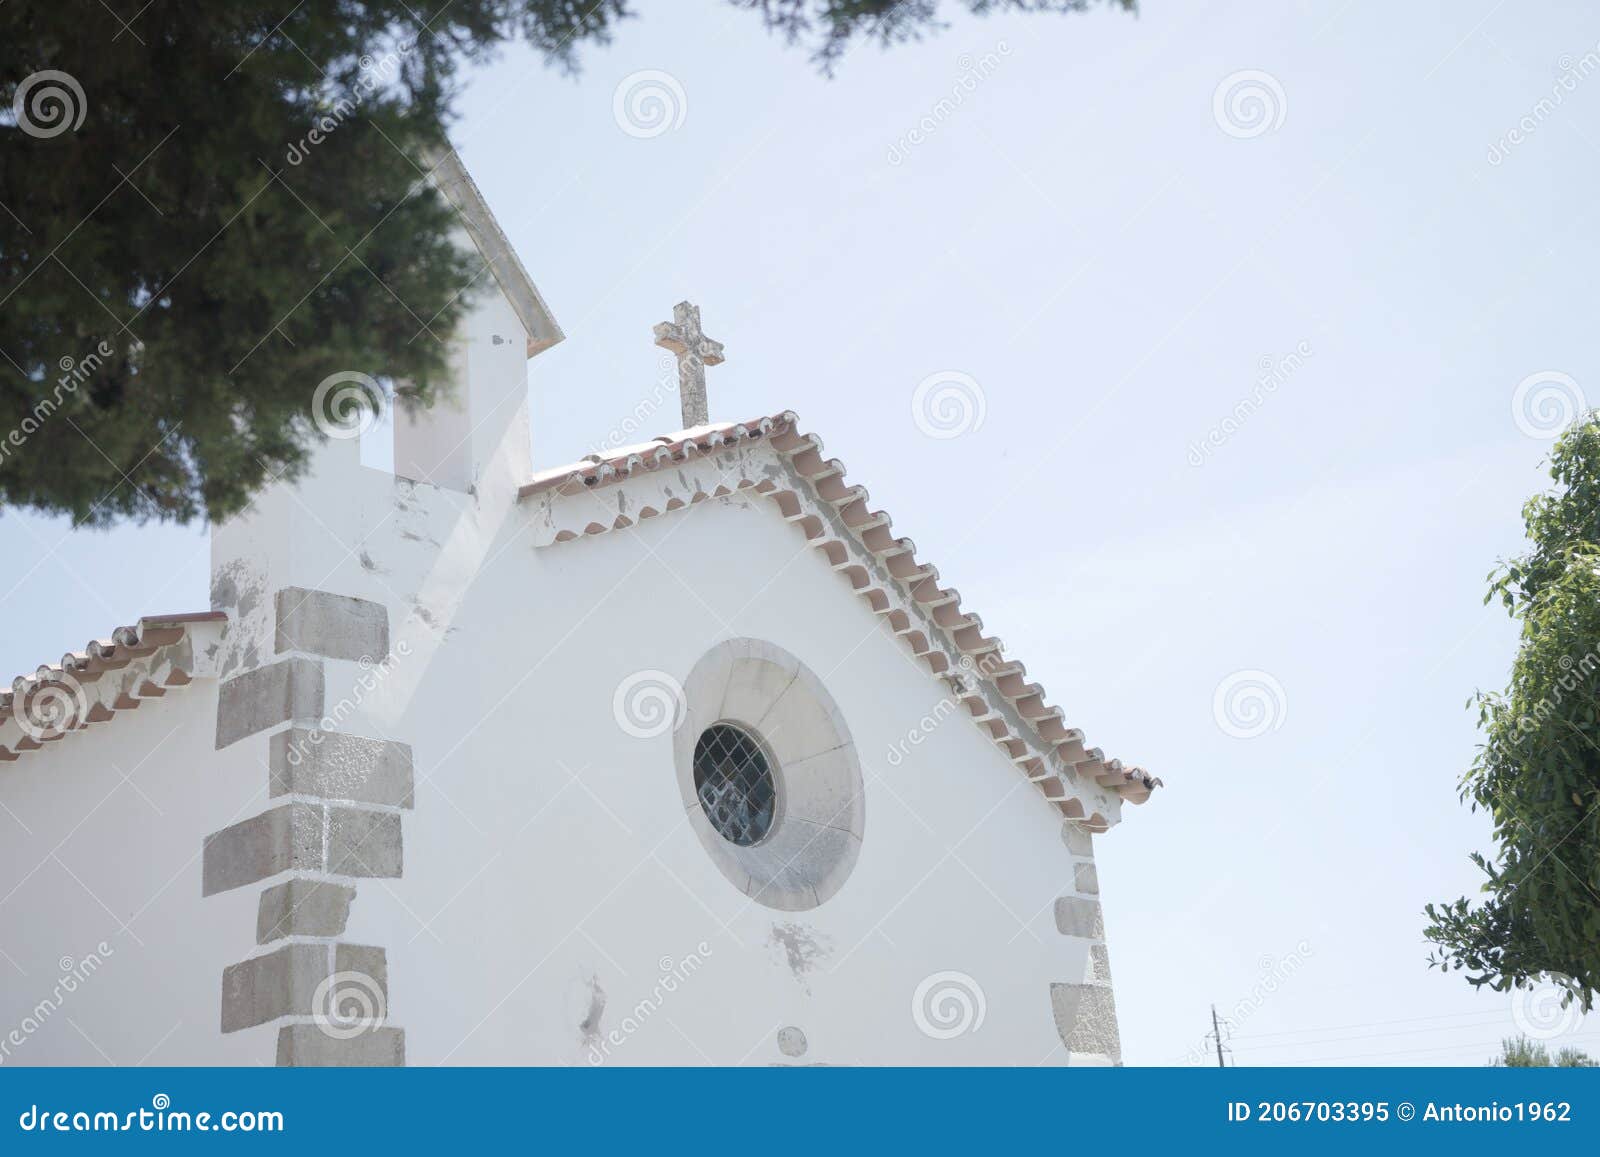 varziela church national monument cantanhede portugal